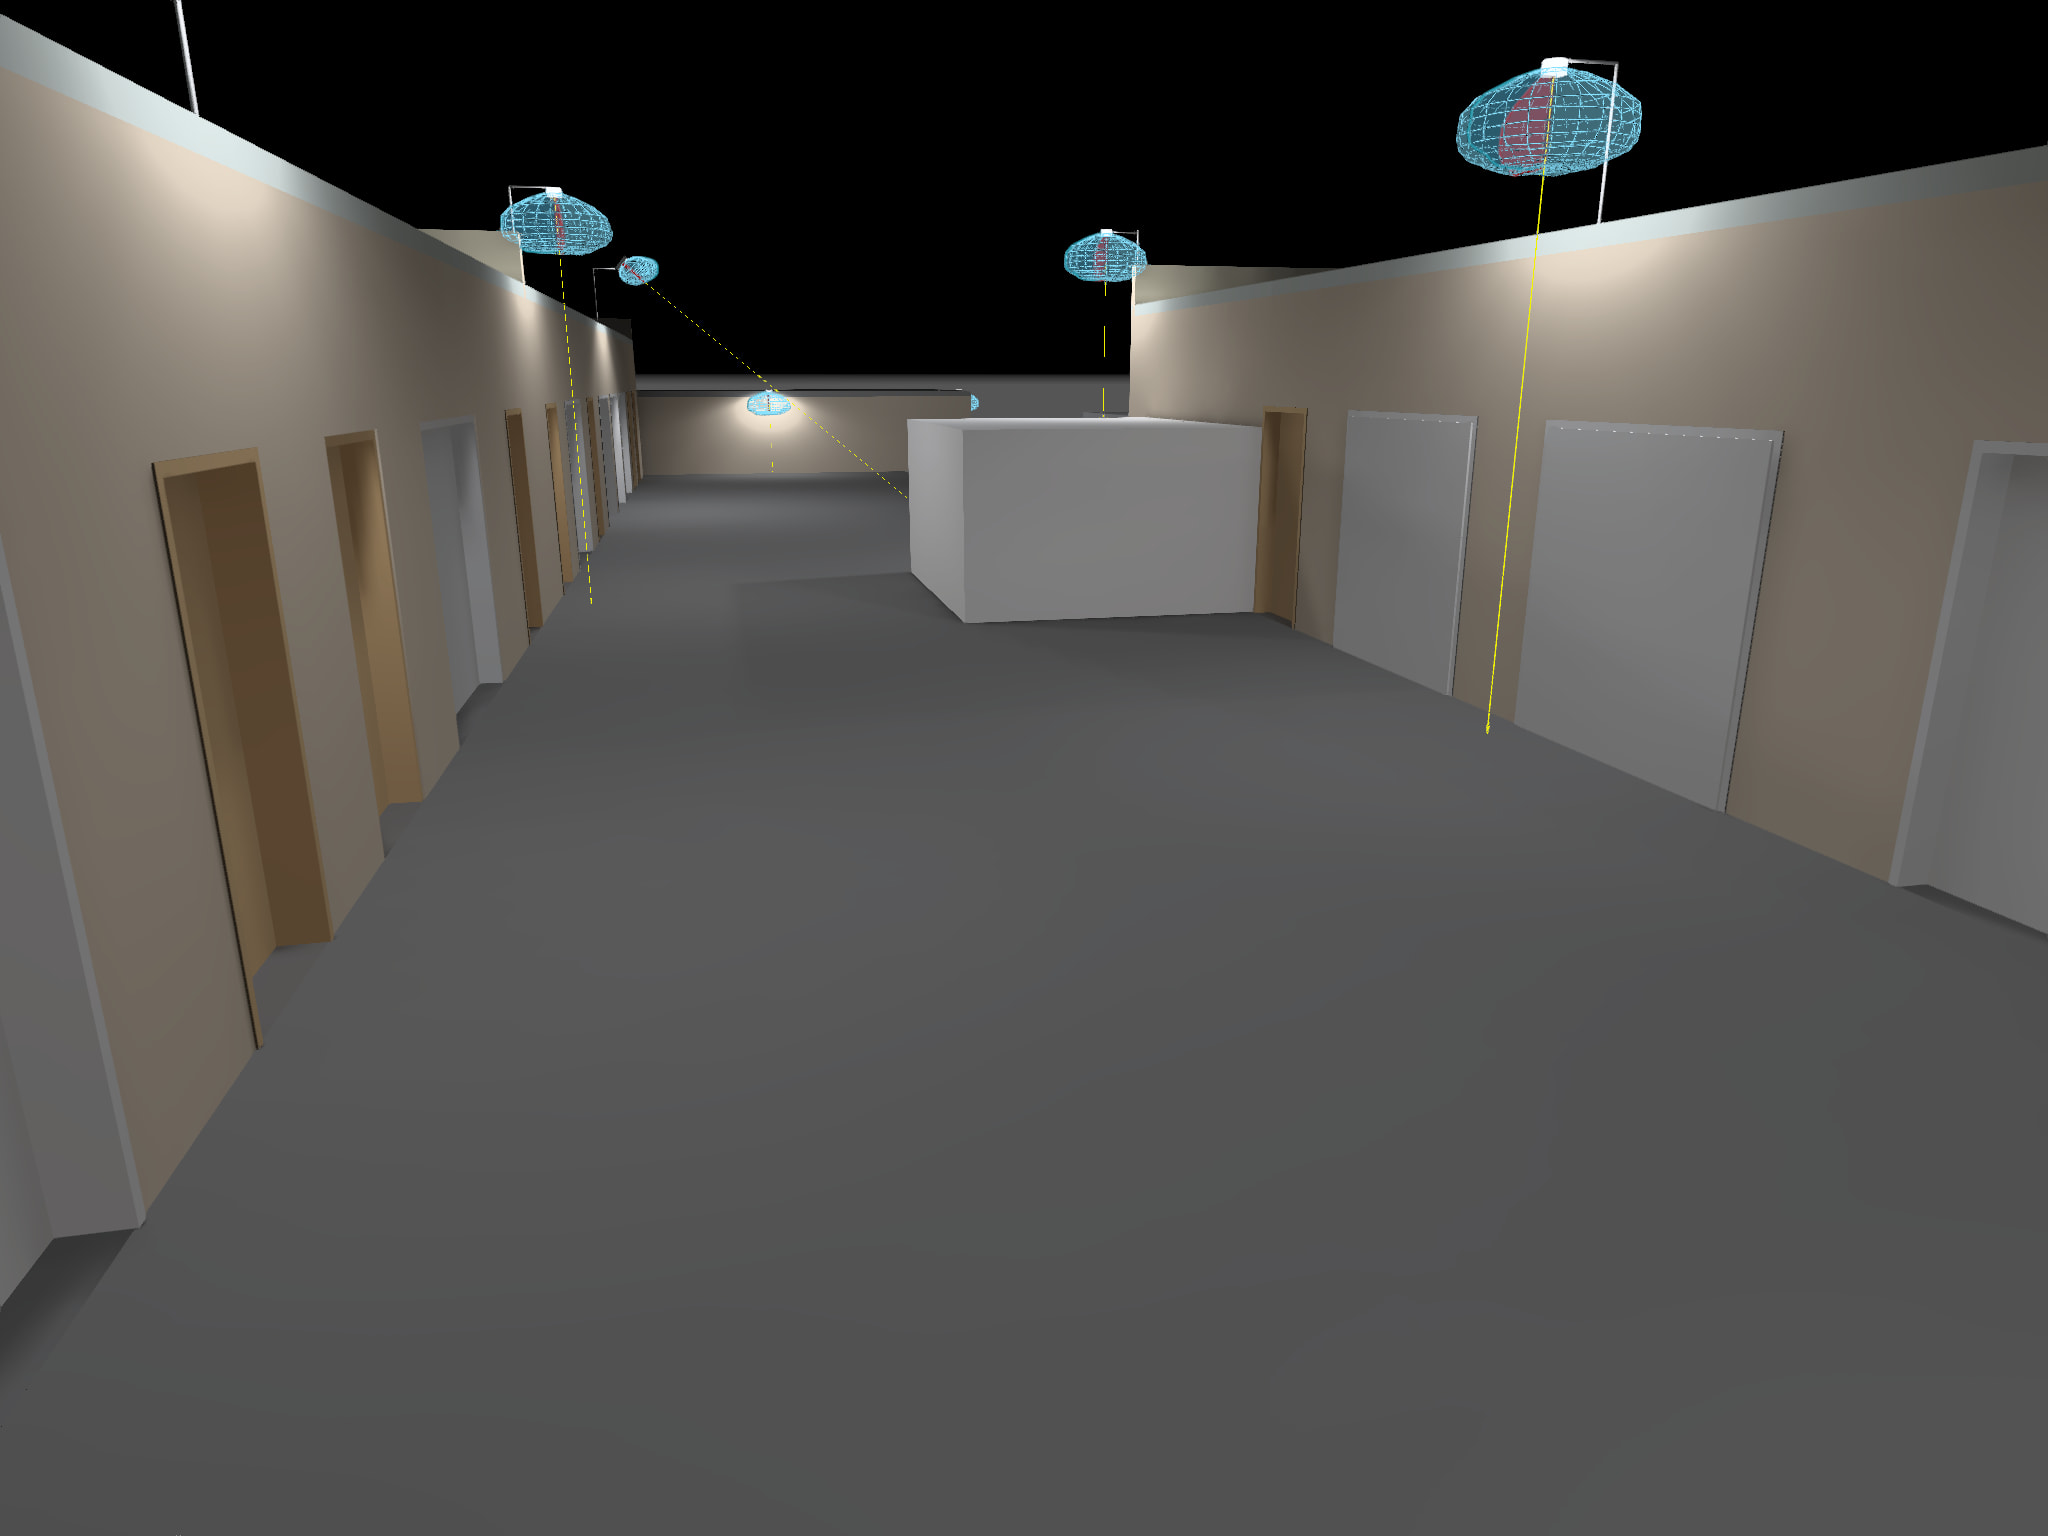 3D model of LED area lights illuminating the storage area of a self storage facility